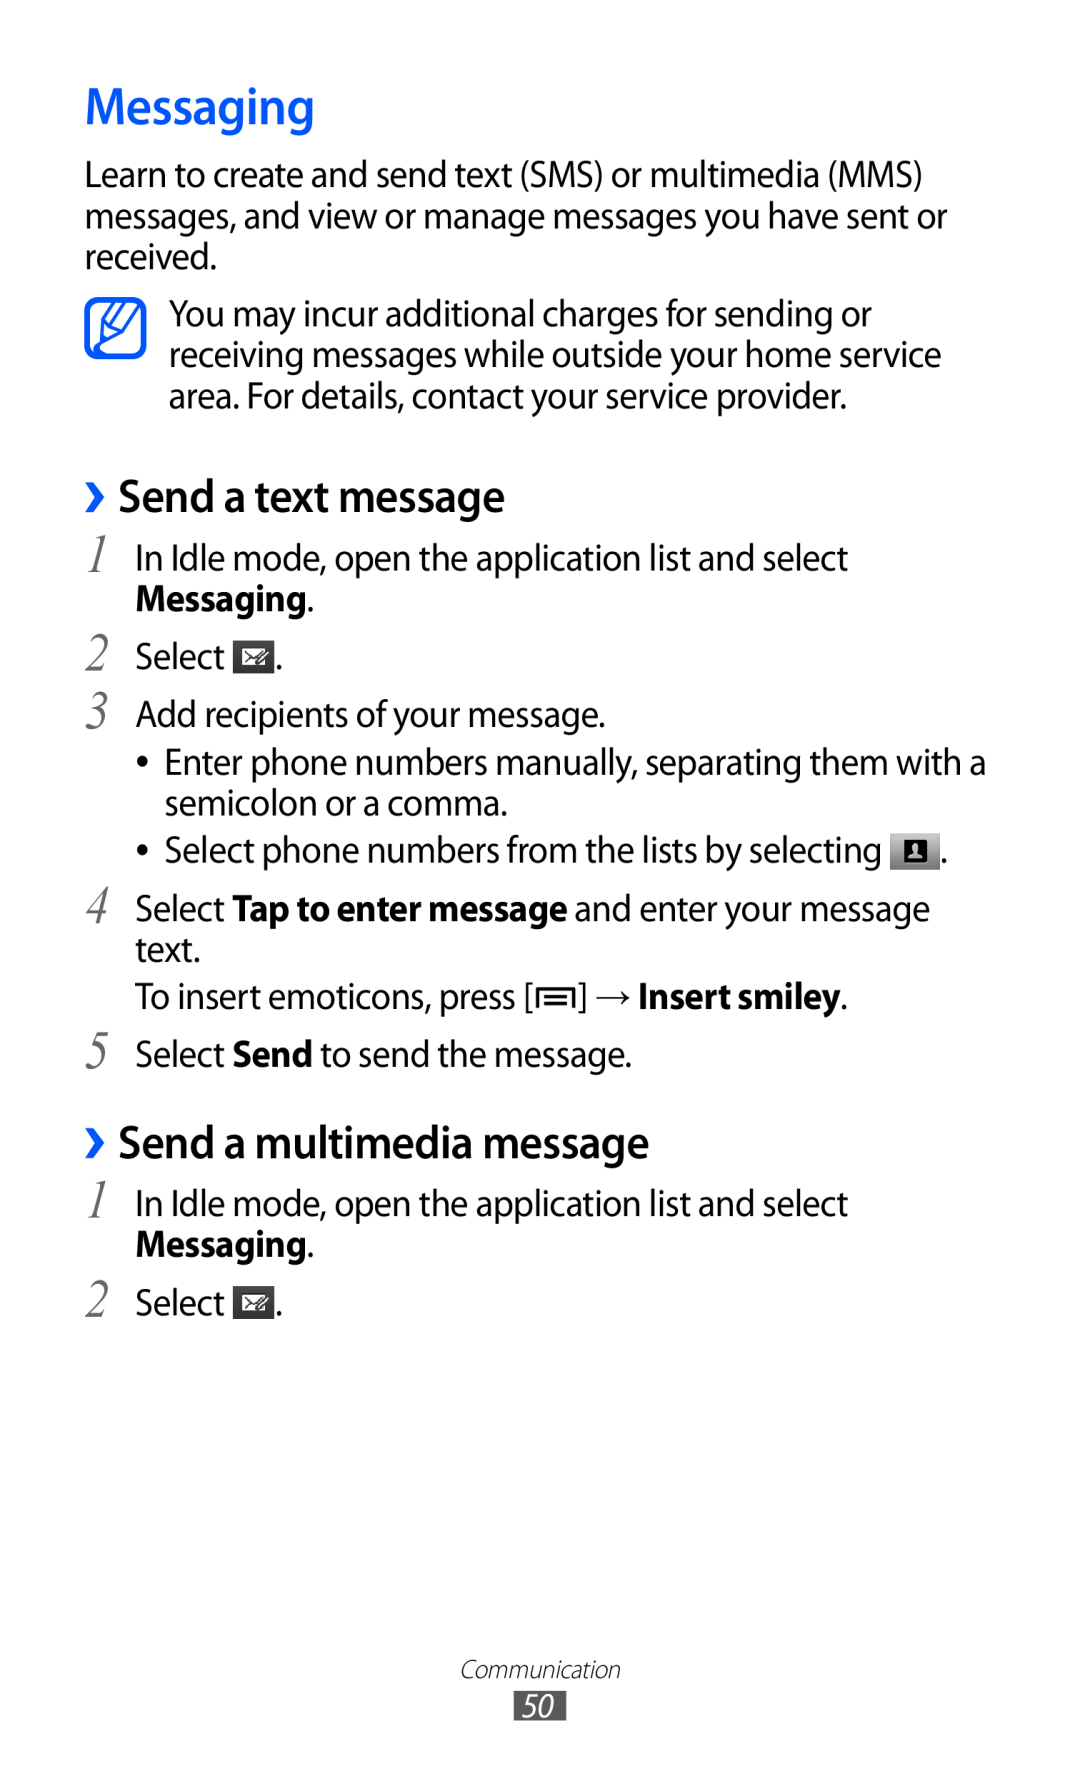 Samsung GT-I9070 user manual Messaging, ››Send a text message, ››Send a multimedia message 